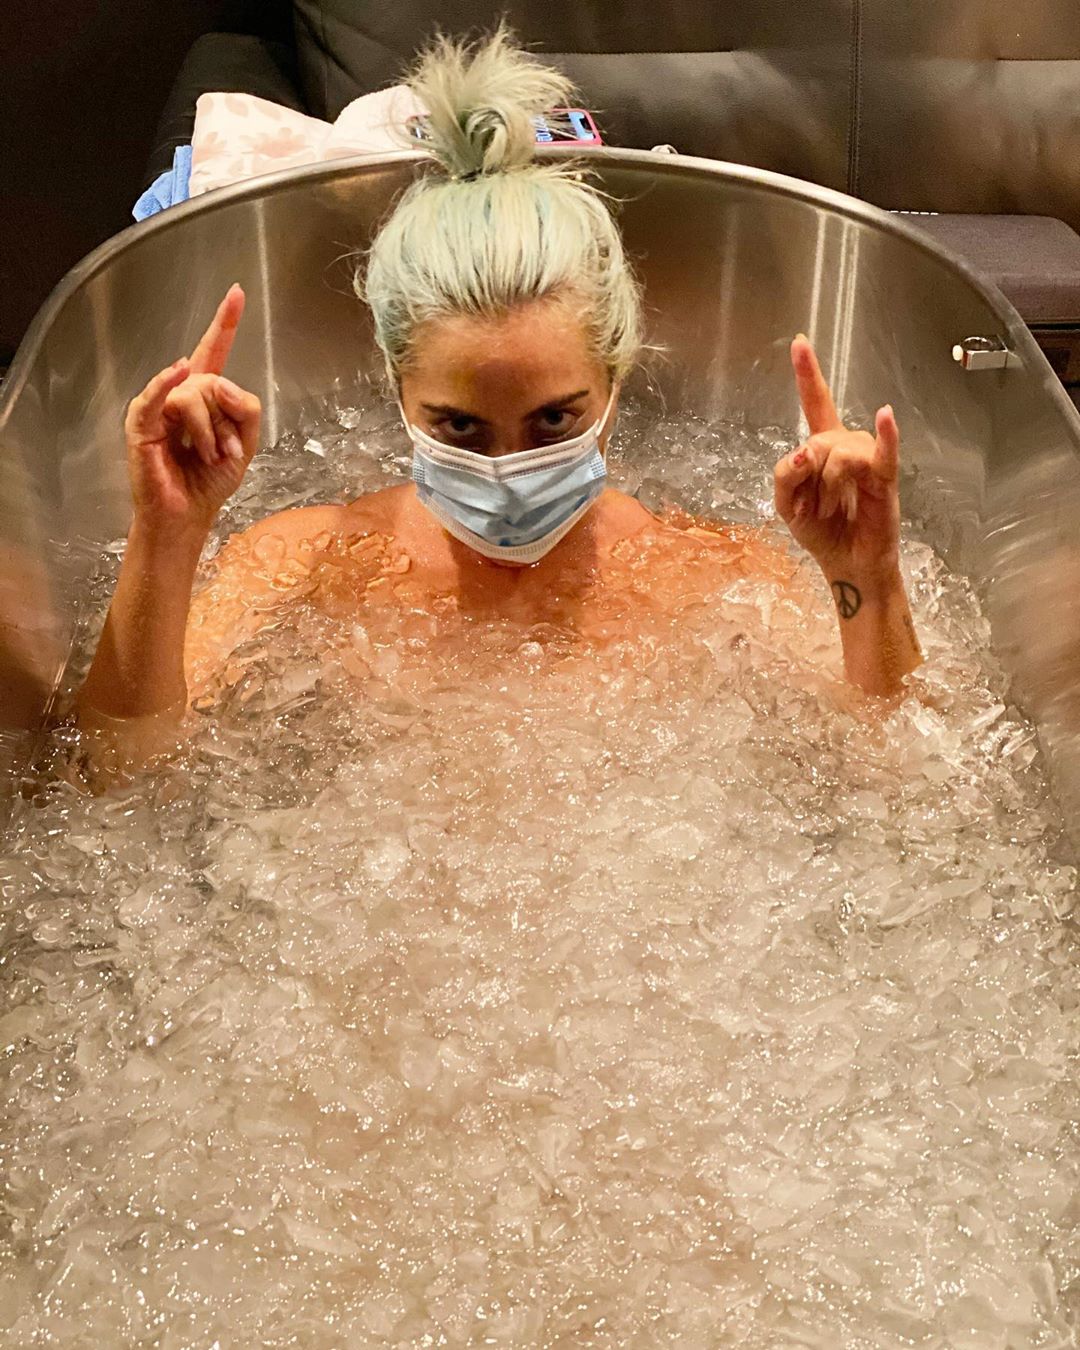 Lady Gaga aposta novamente no tratamento de crioterapia para se apresentar no VMAS. Entenda como funciona! Foto: Instagram: @ladygaga